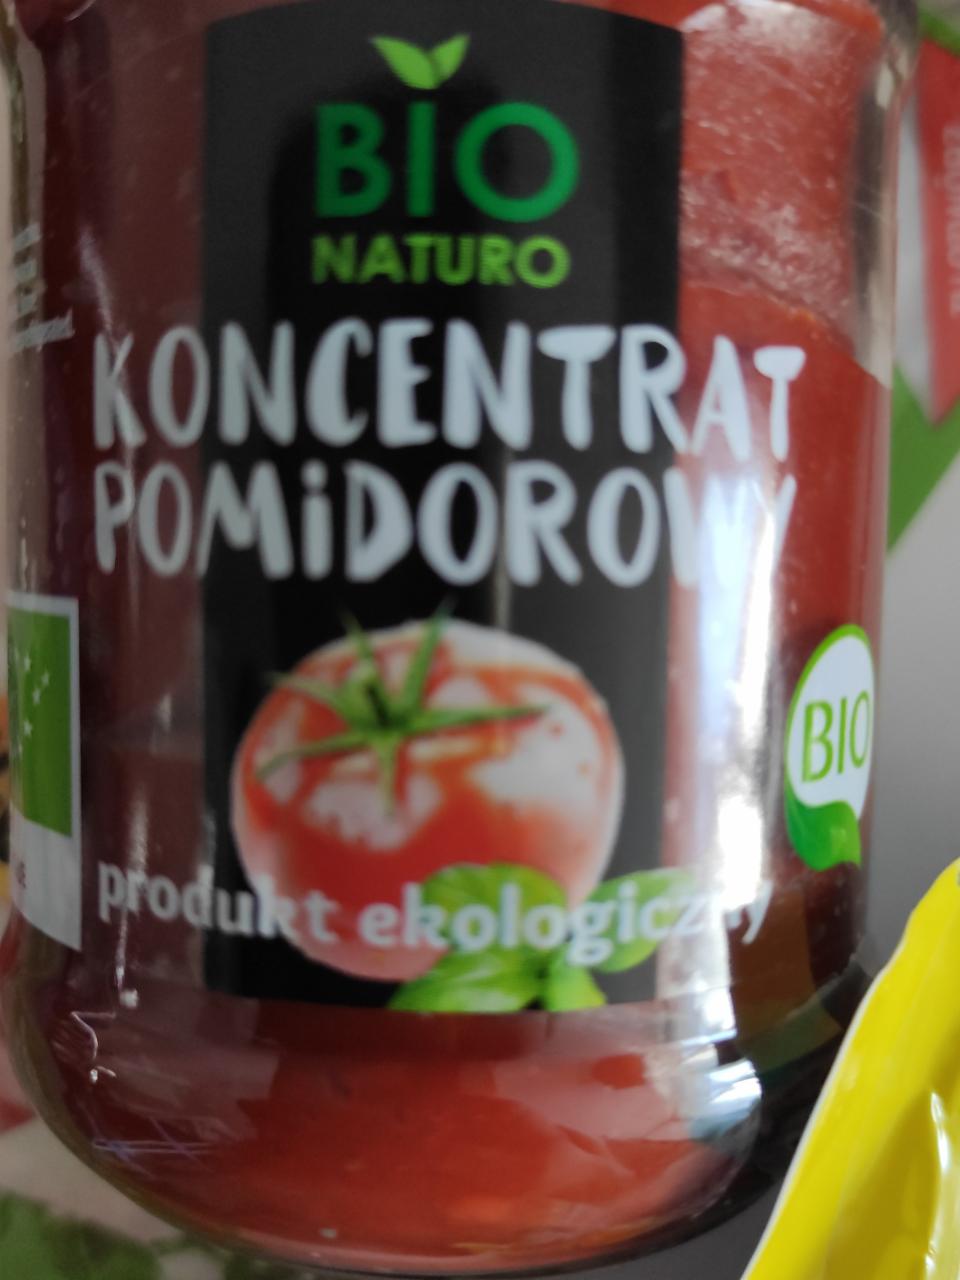 Zdjęcia - koncentrat pomidorowy bio naturo